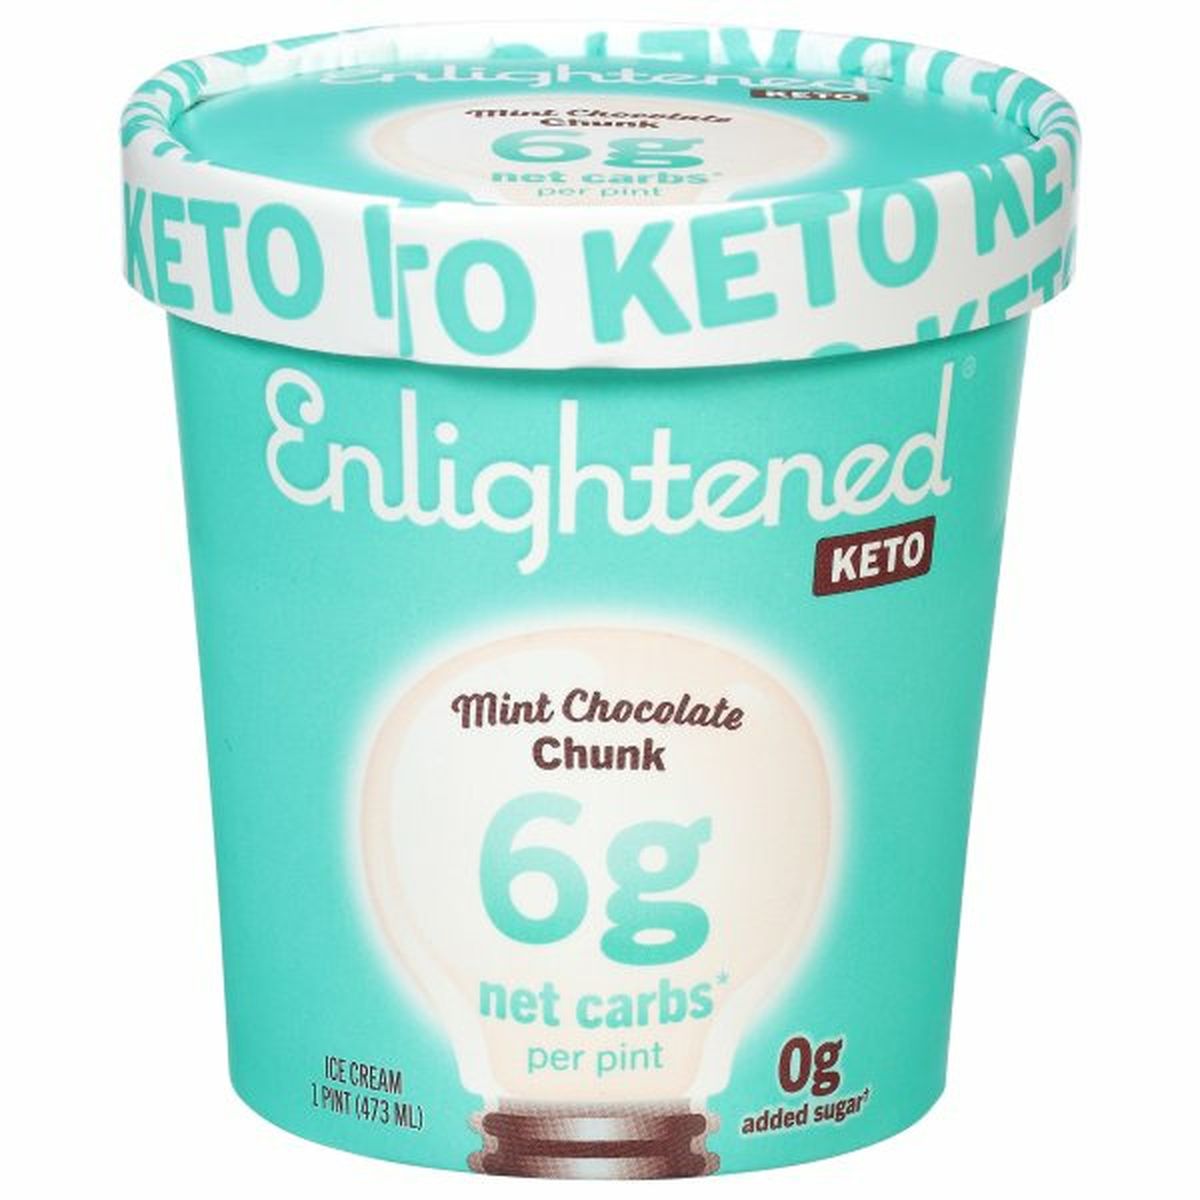 Calories in Enlightened Keto Ice Cream, Milk Chocolate Chunk